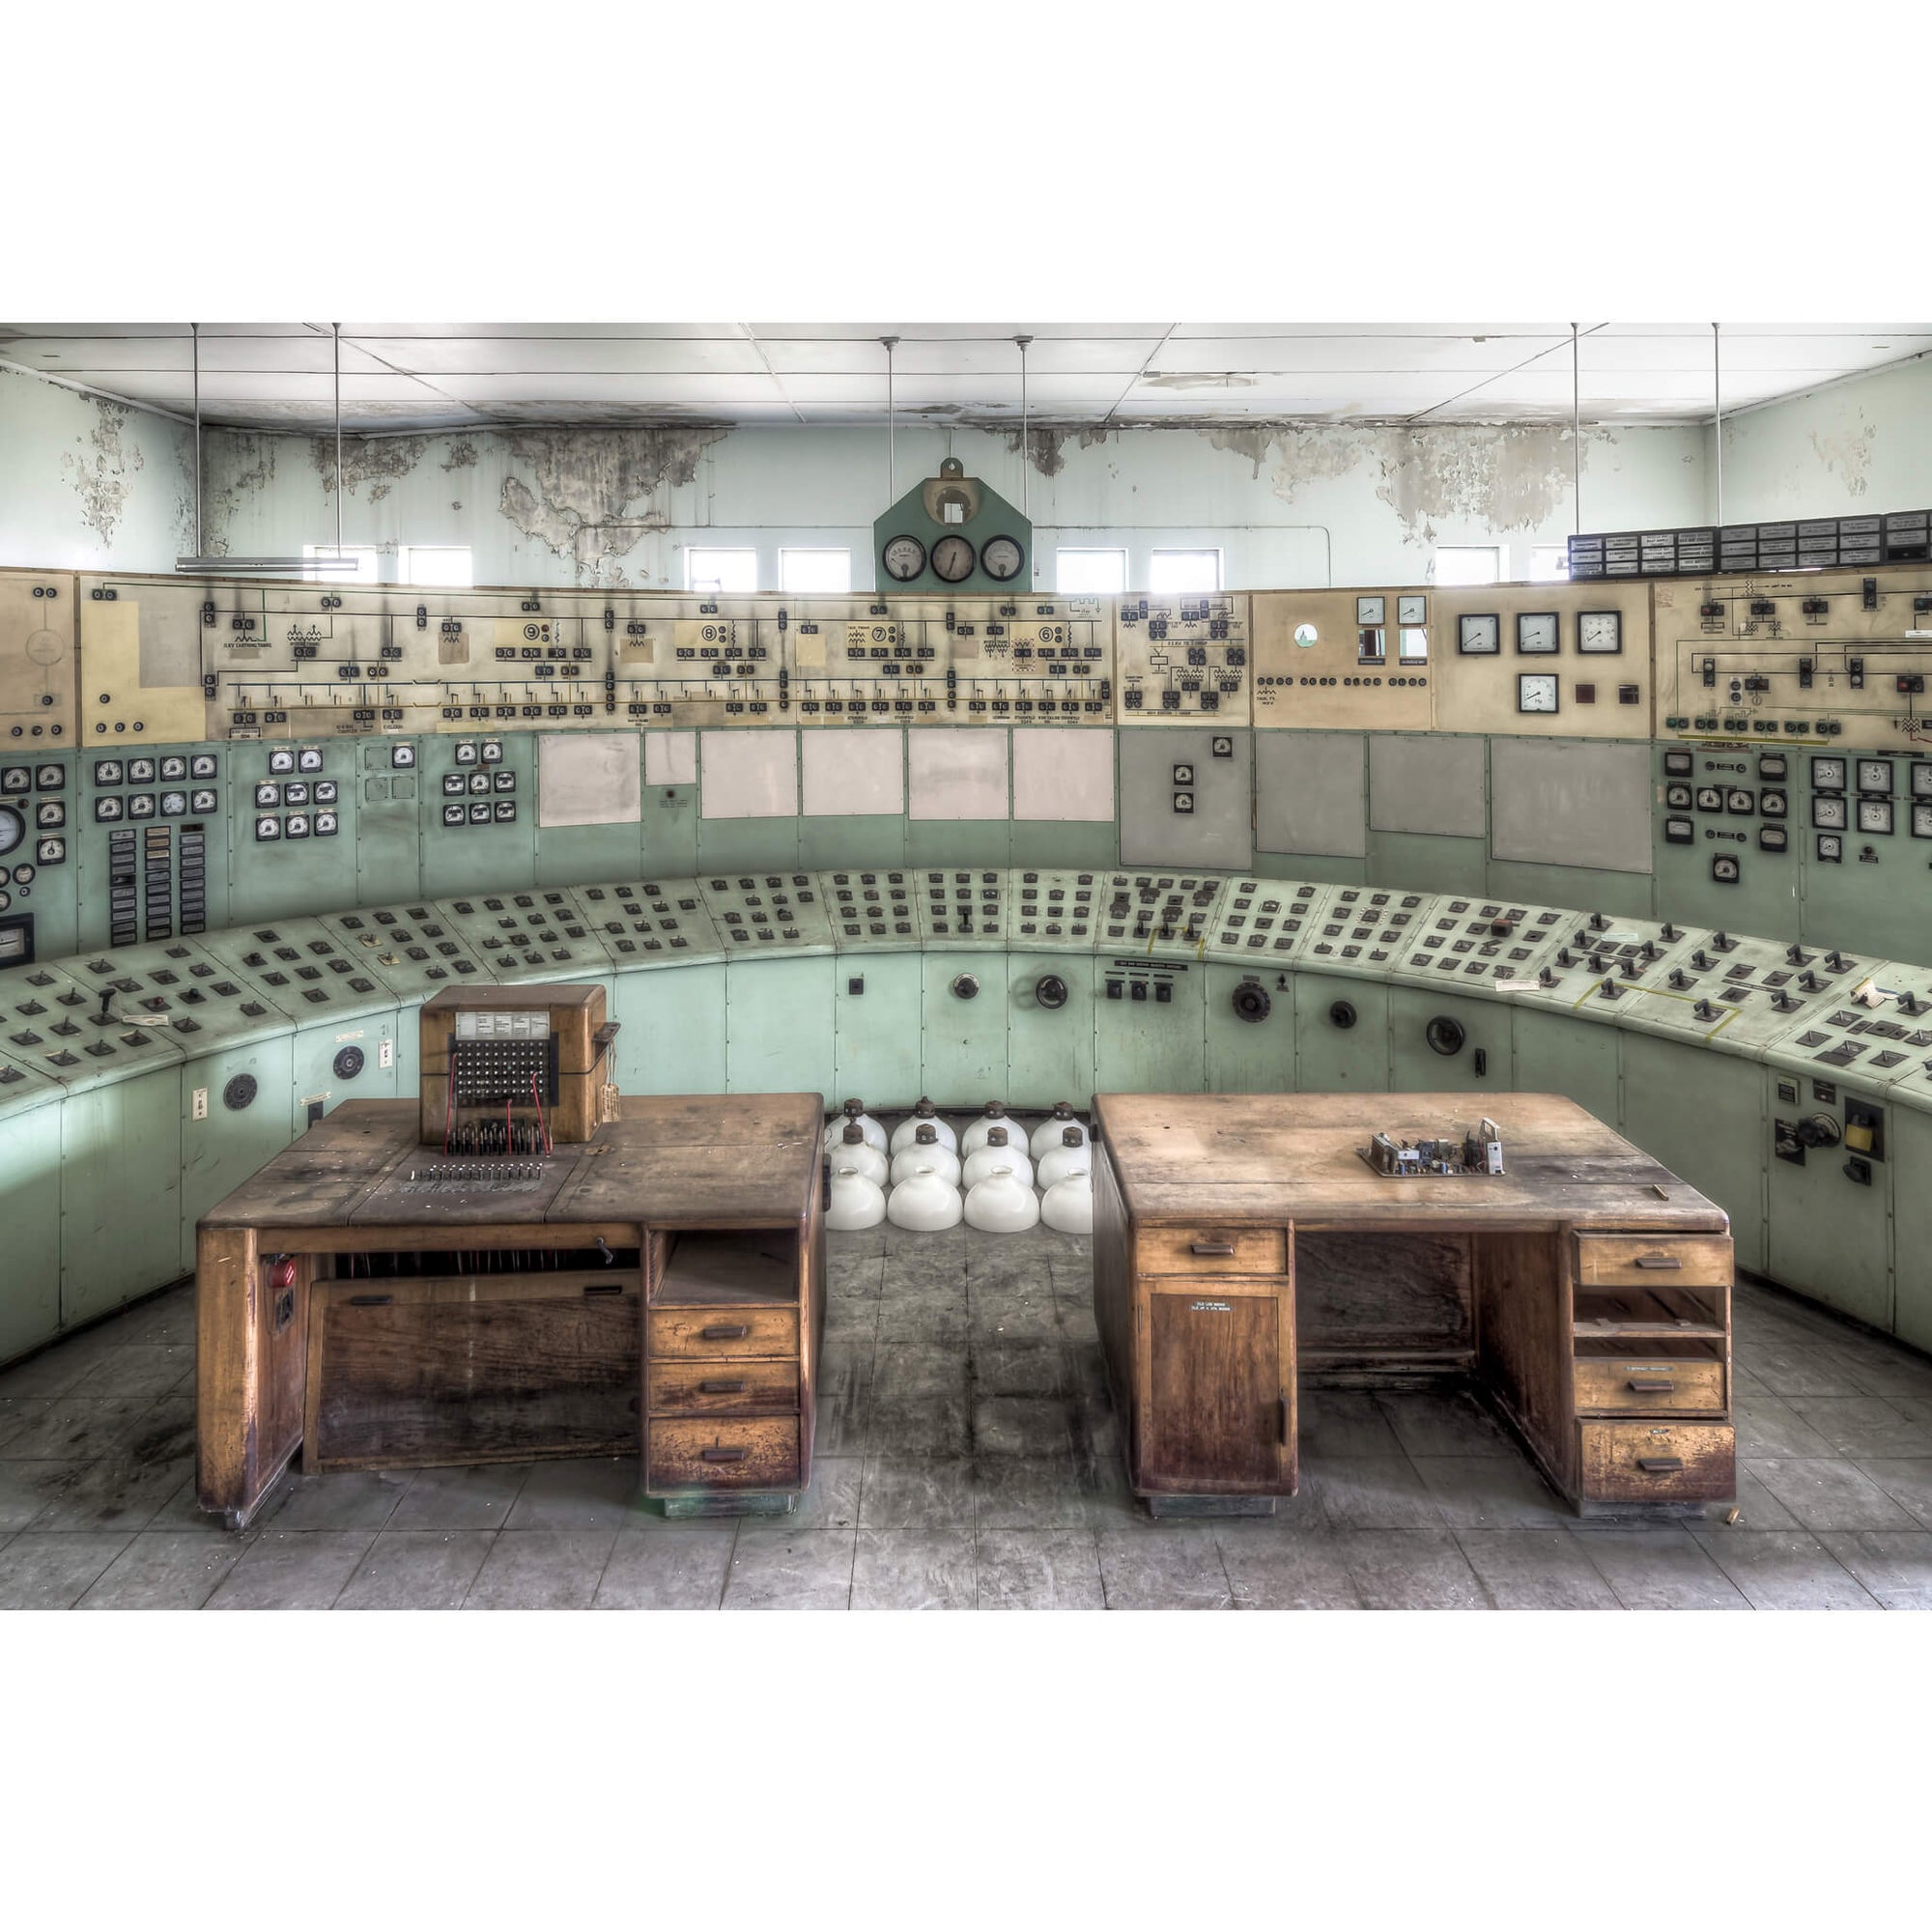 Control Room Desks | White Bay Power Station